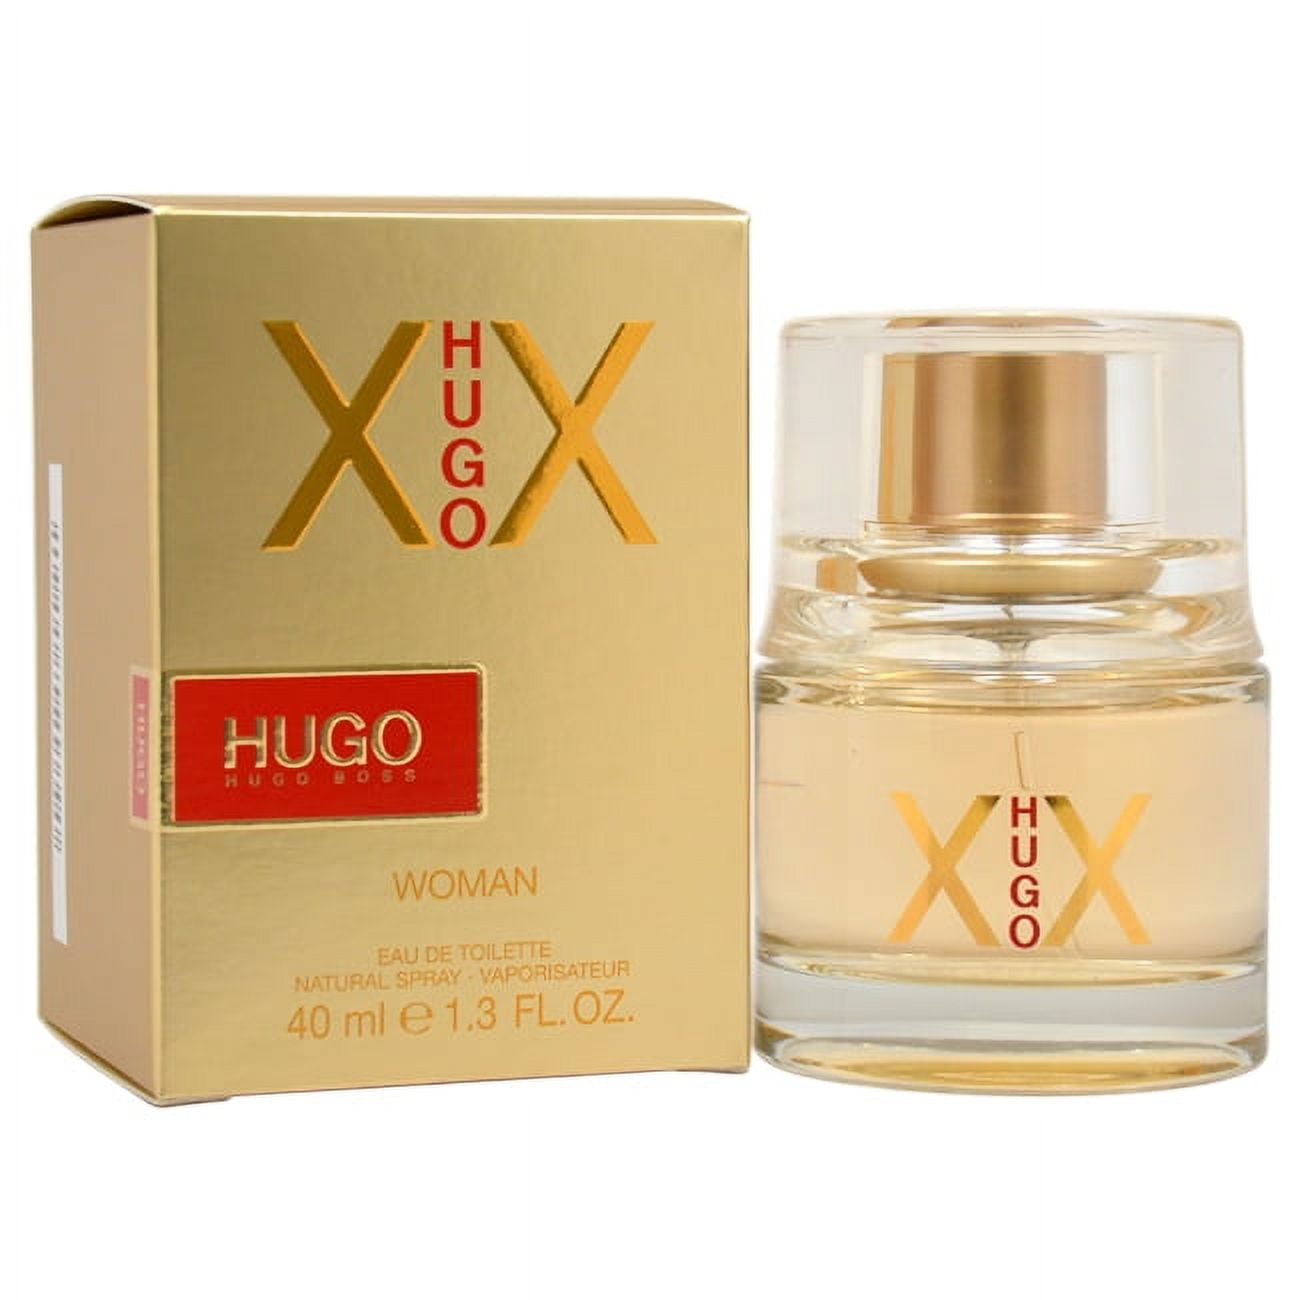 HUGO BOSS Hugo XX Eau de Toilette, Perfume for Women, 1.3 Oz